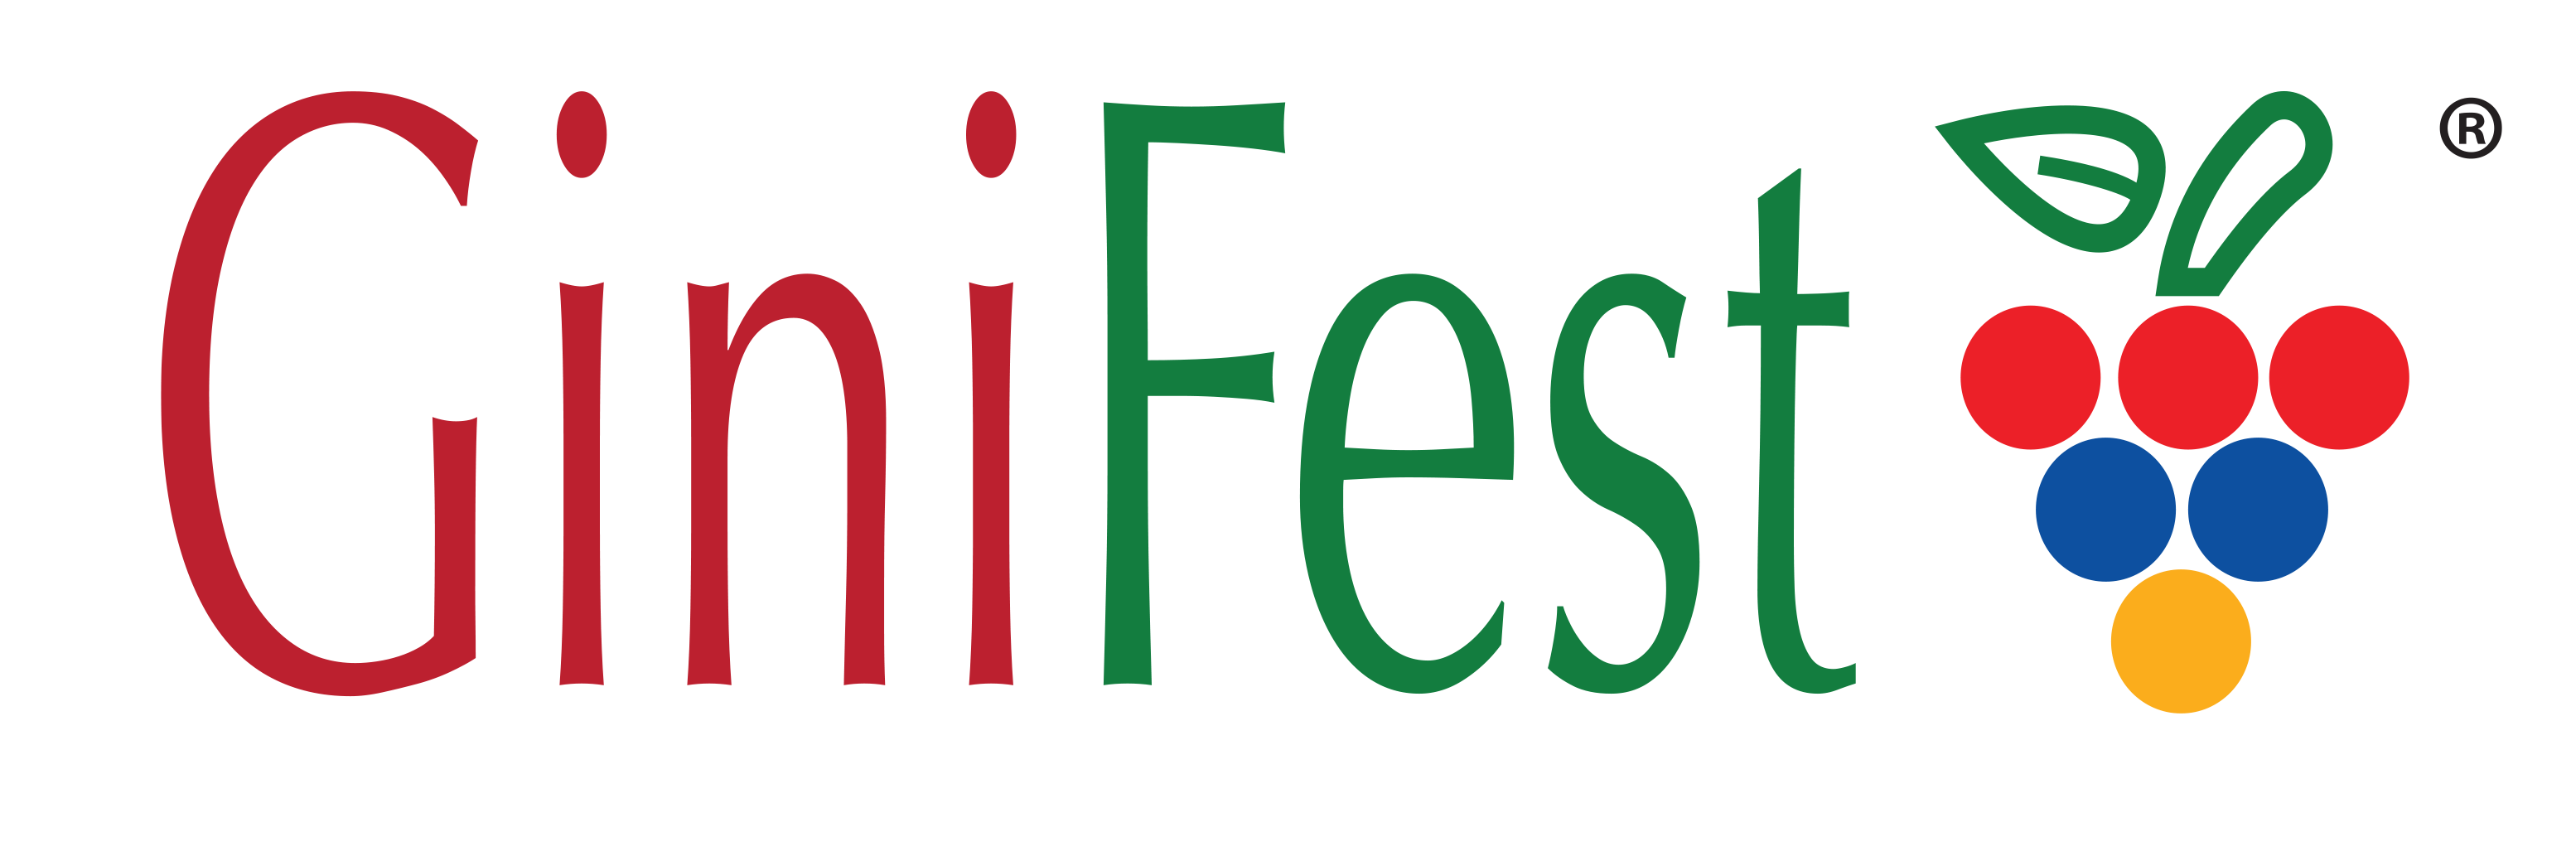 Ginifest International Armenian Wine and Spirits Festival in USA